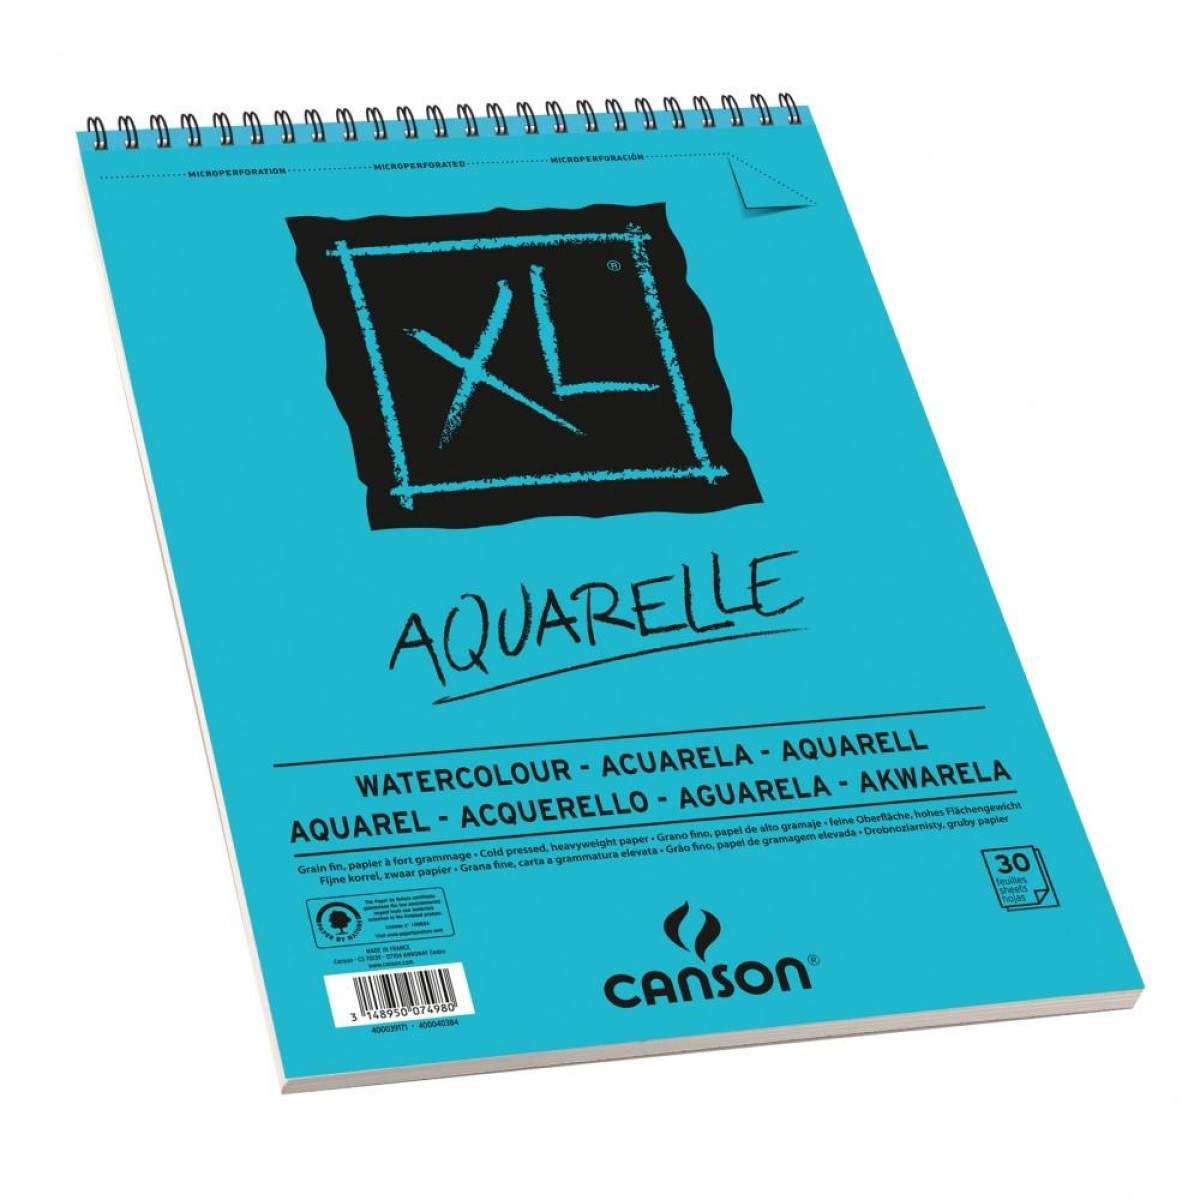 Block Canson Aquarelle Sketchbook Album Acuarela 21 X 30